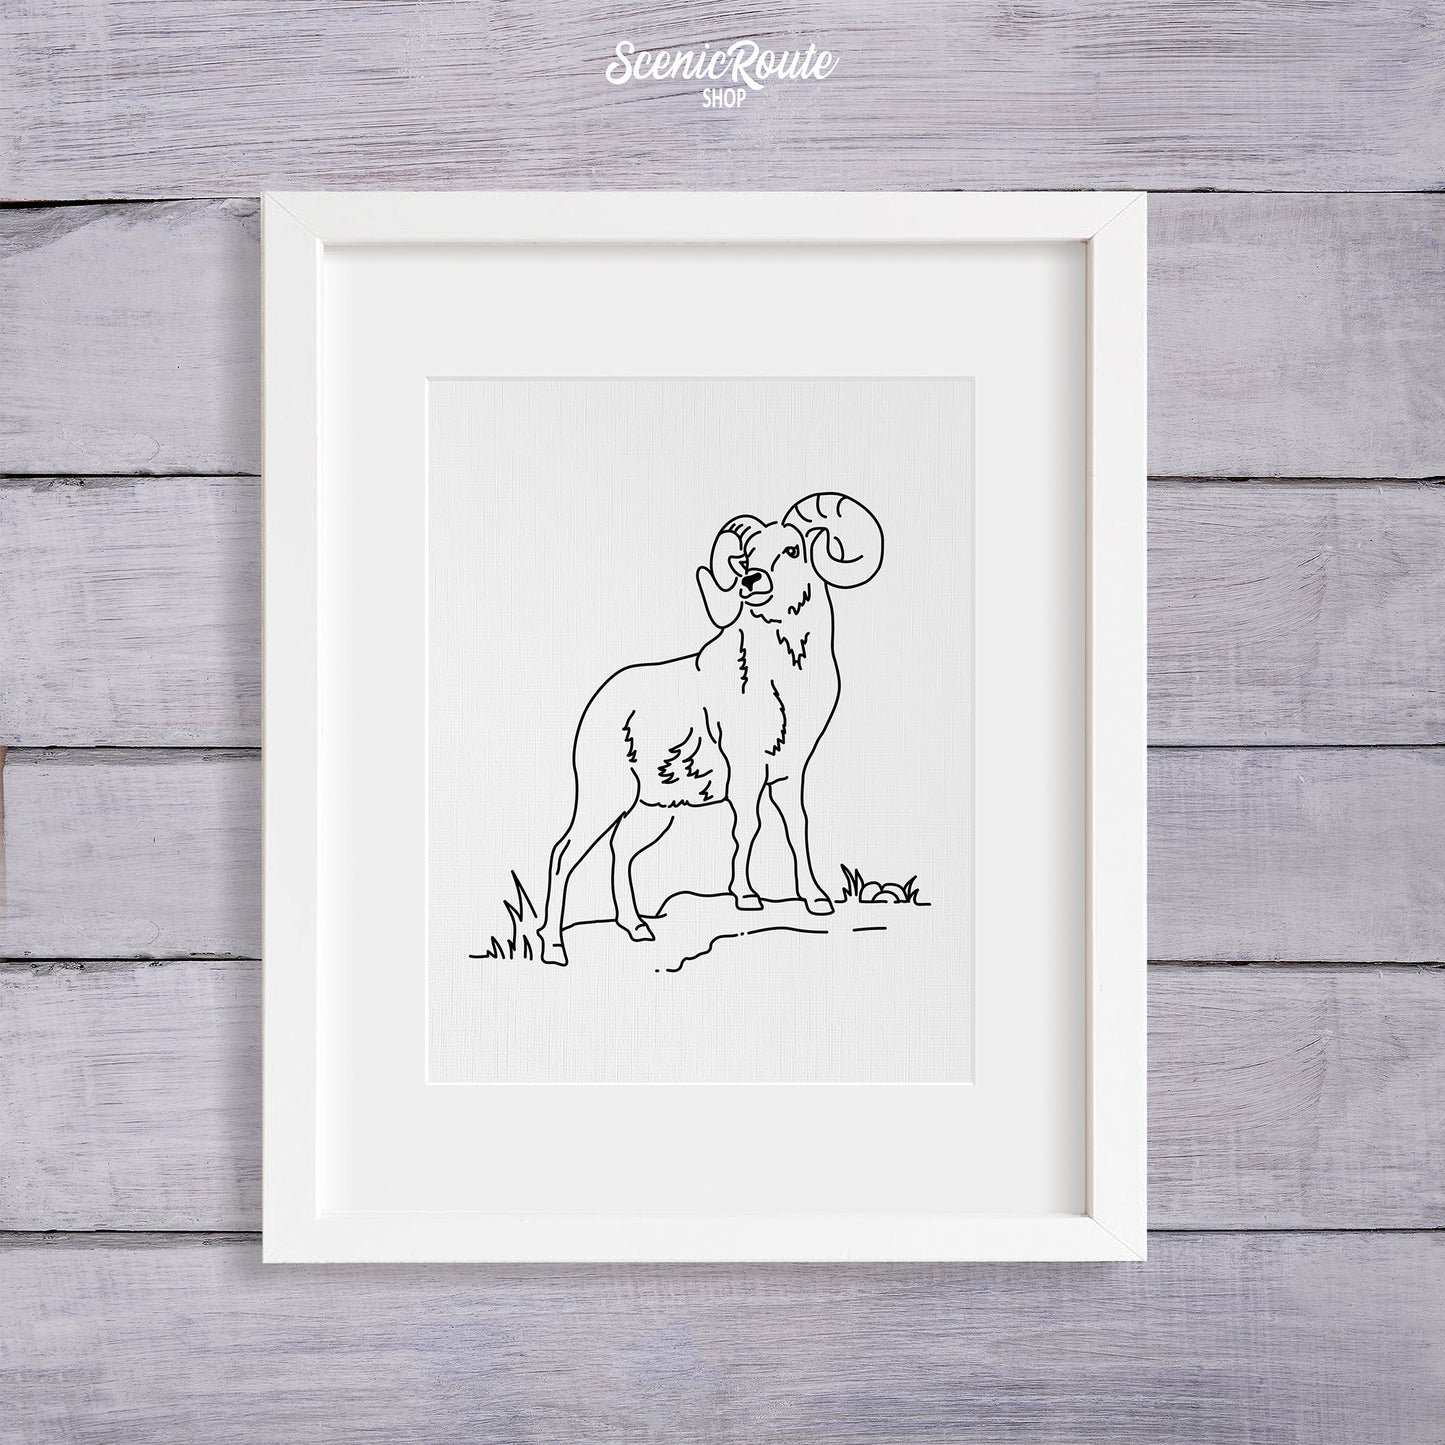 A framed line art drawing of a Longhorn Sheep